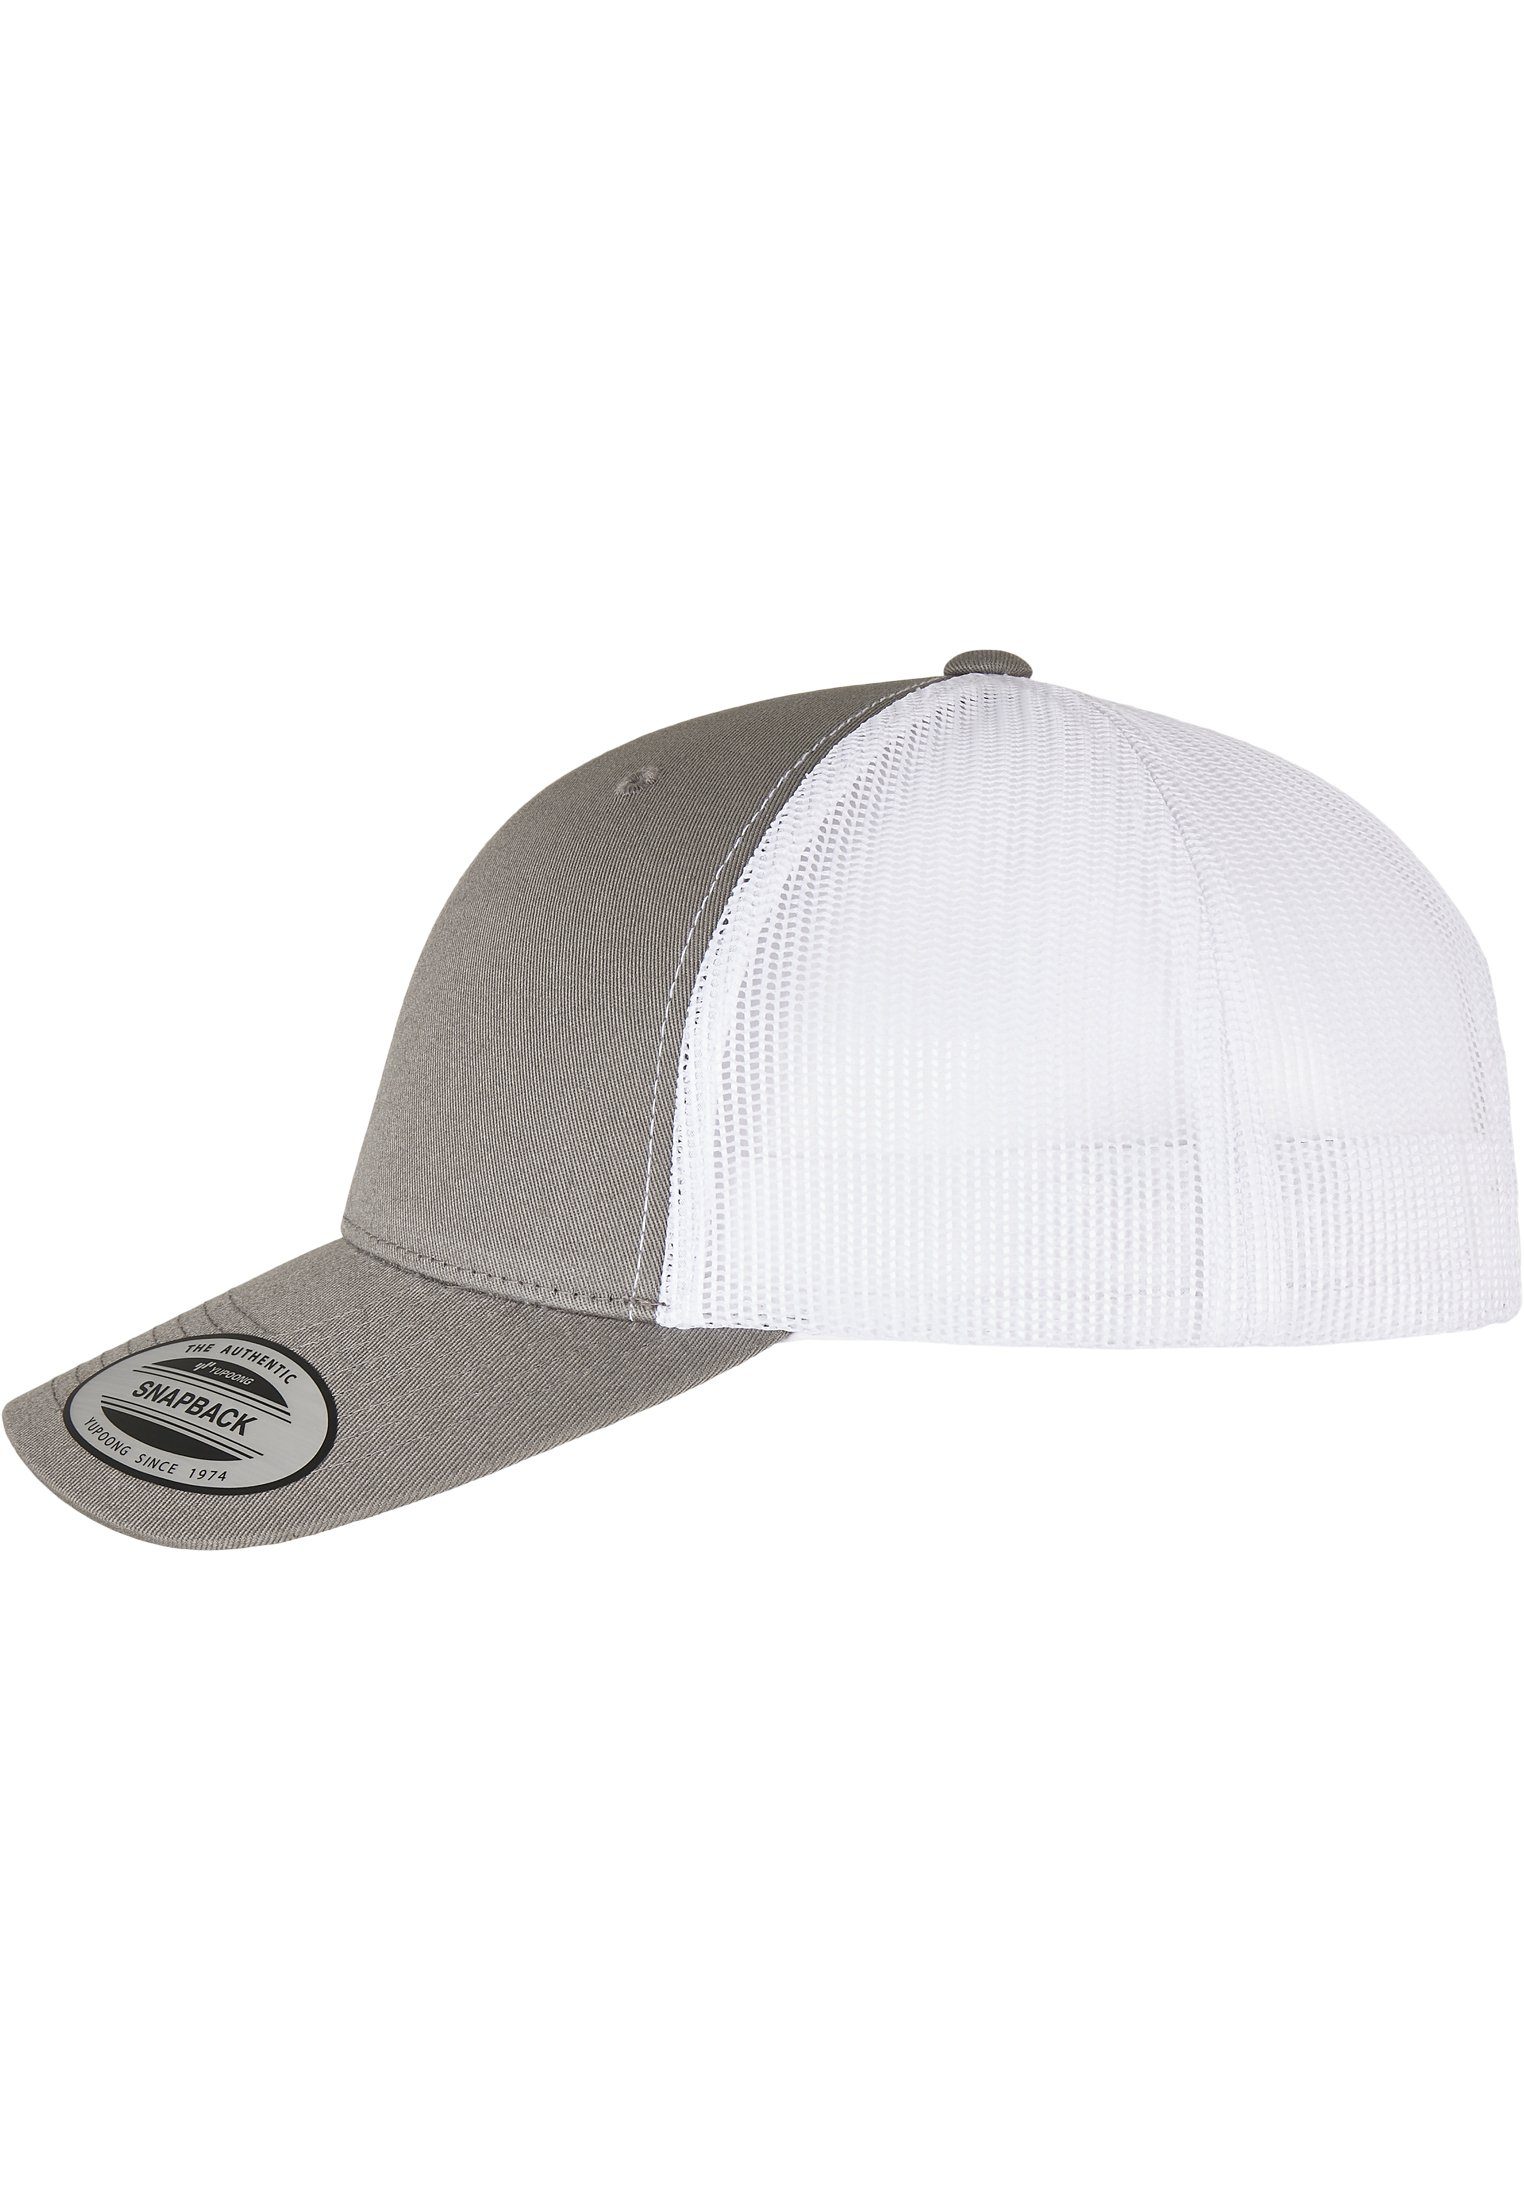 Flexfit Flex Cap YP Caps CAP CLASSICS grey/white 2-TONE TRUCKER RETRO RECYCLED